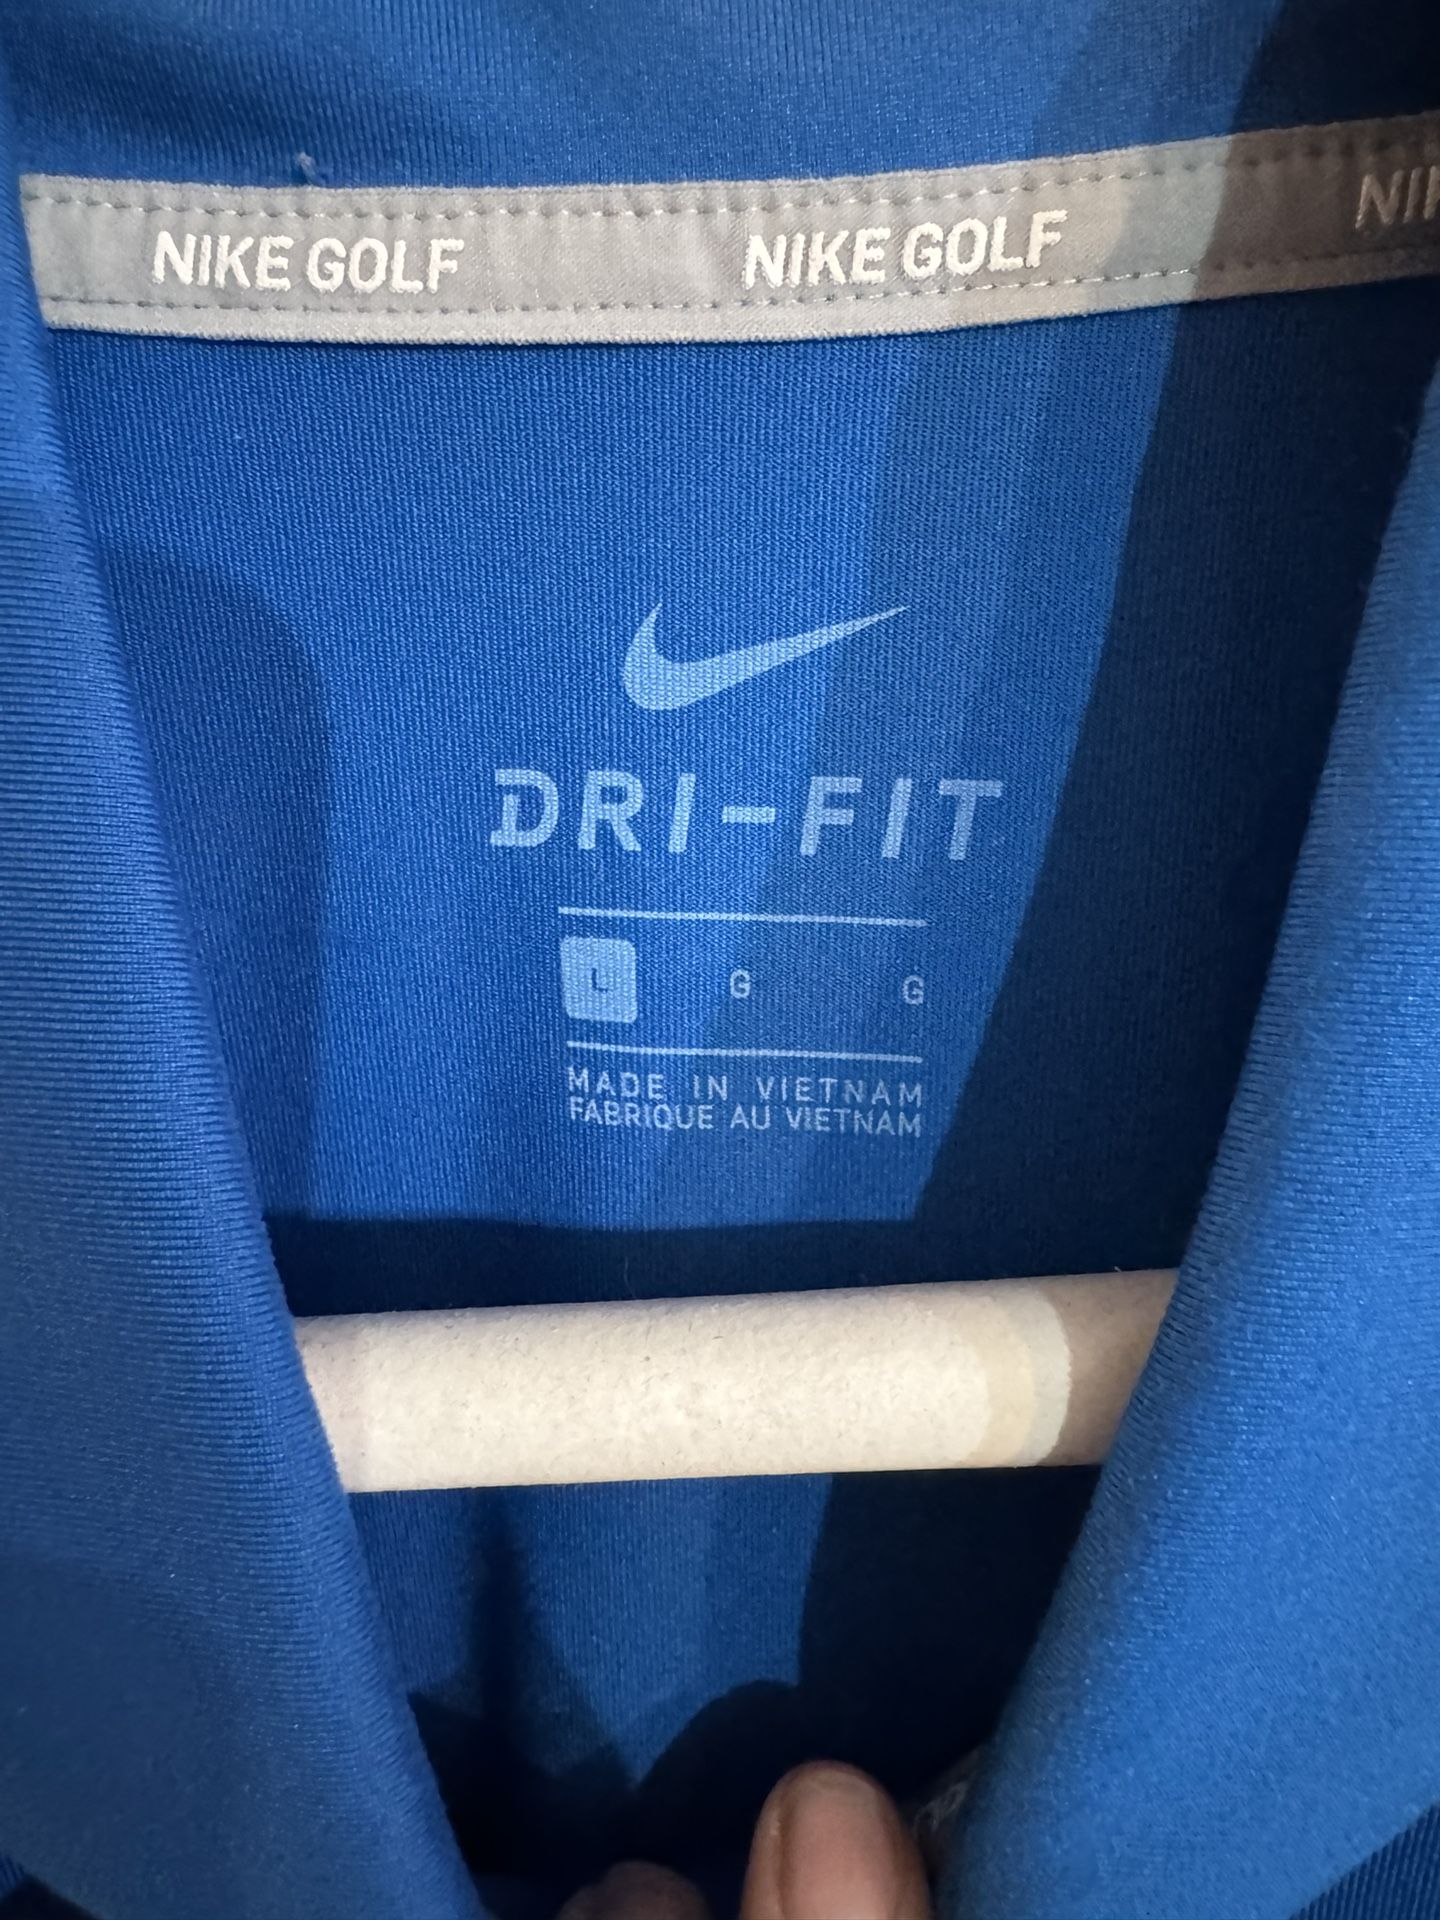 Nike Dri-Fit Polo